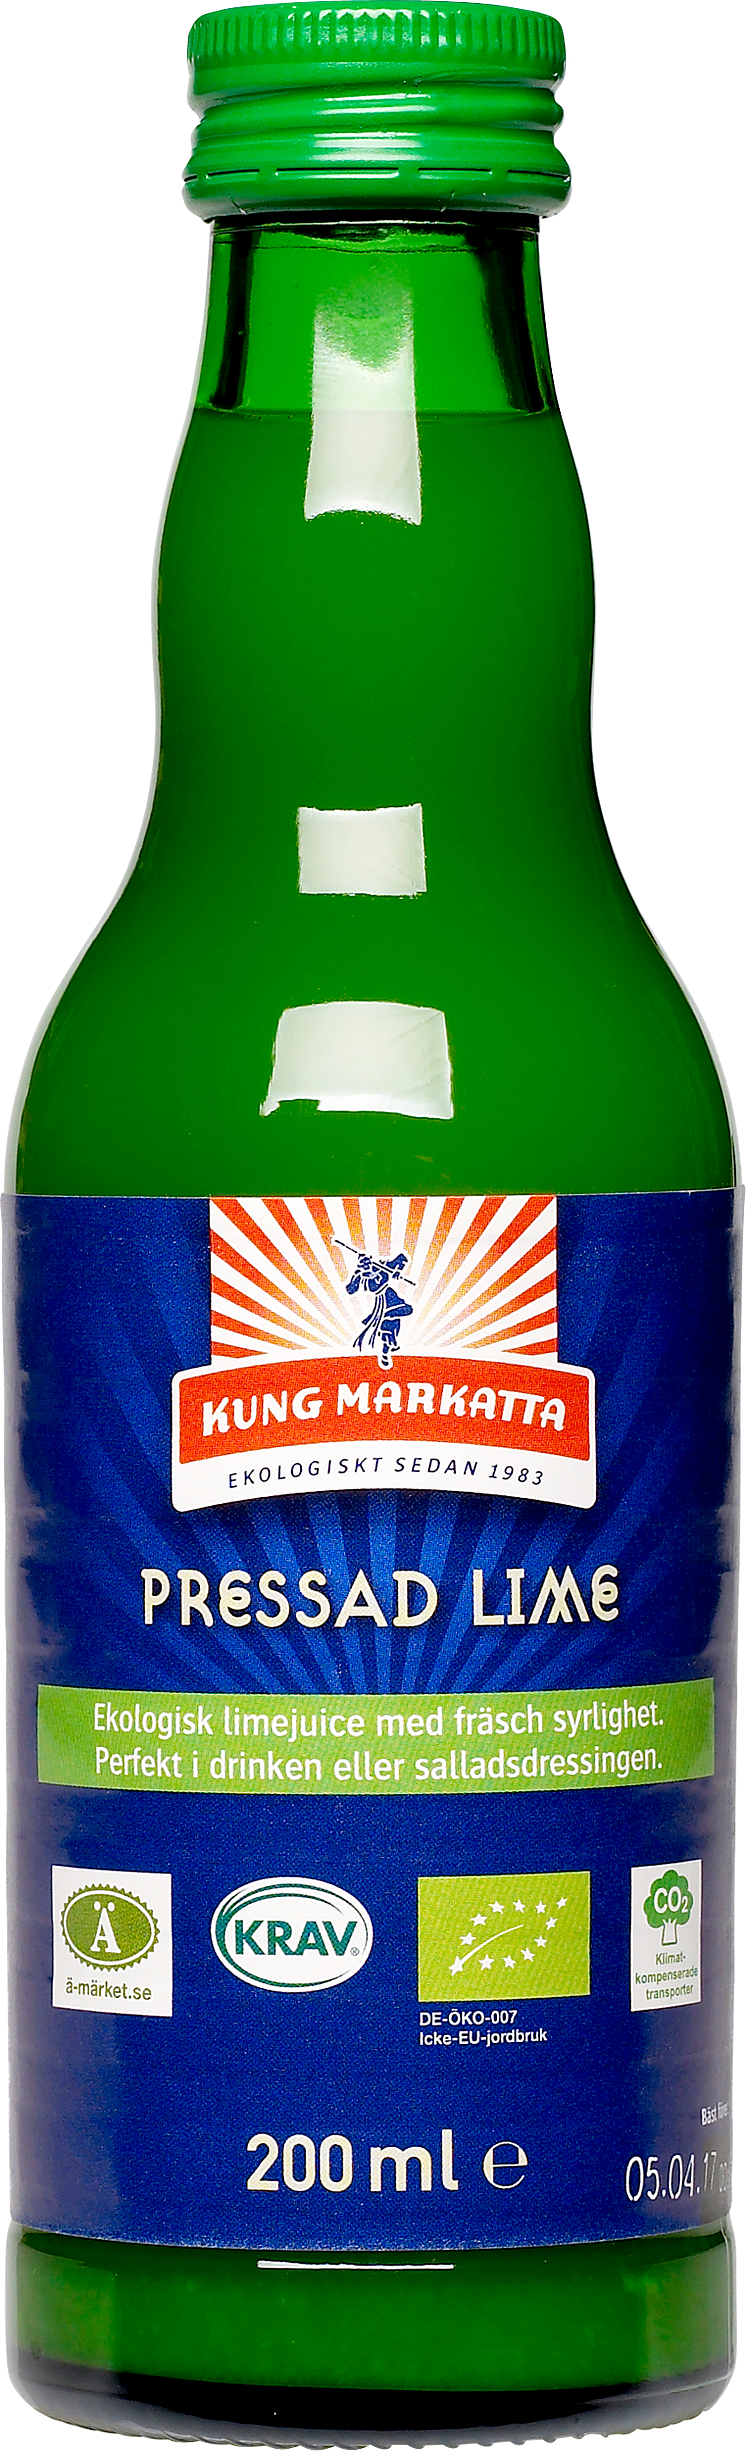 Kung Markatta Pressad Lime, 200 ml